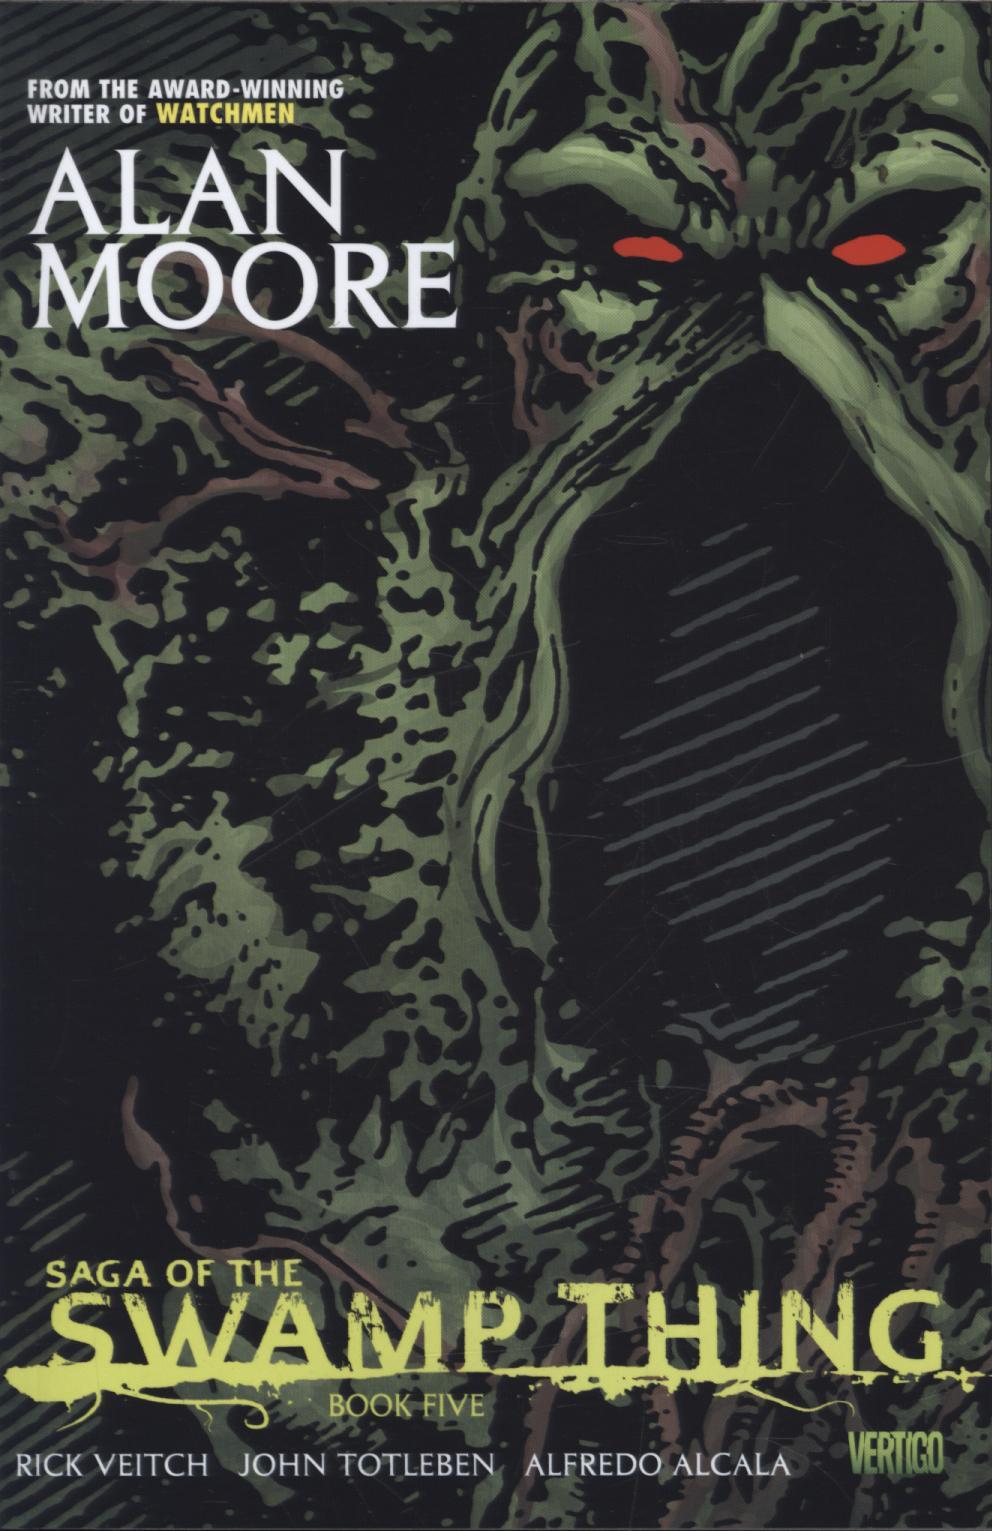 Saga of the Swamp Thing: Book 5 - Alan Moore, Rick Veitch, John Totleben